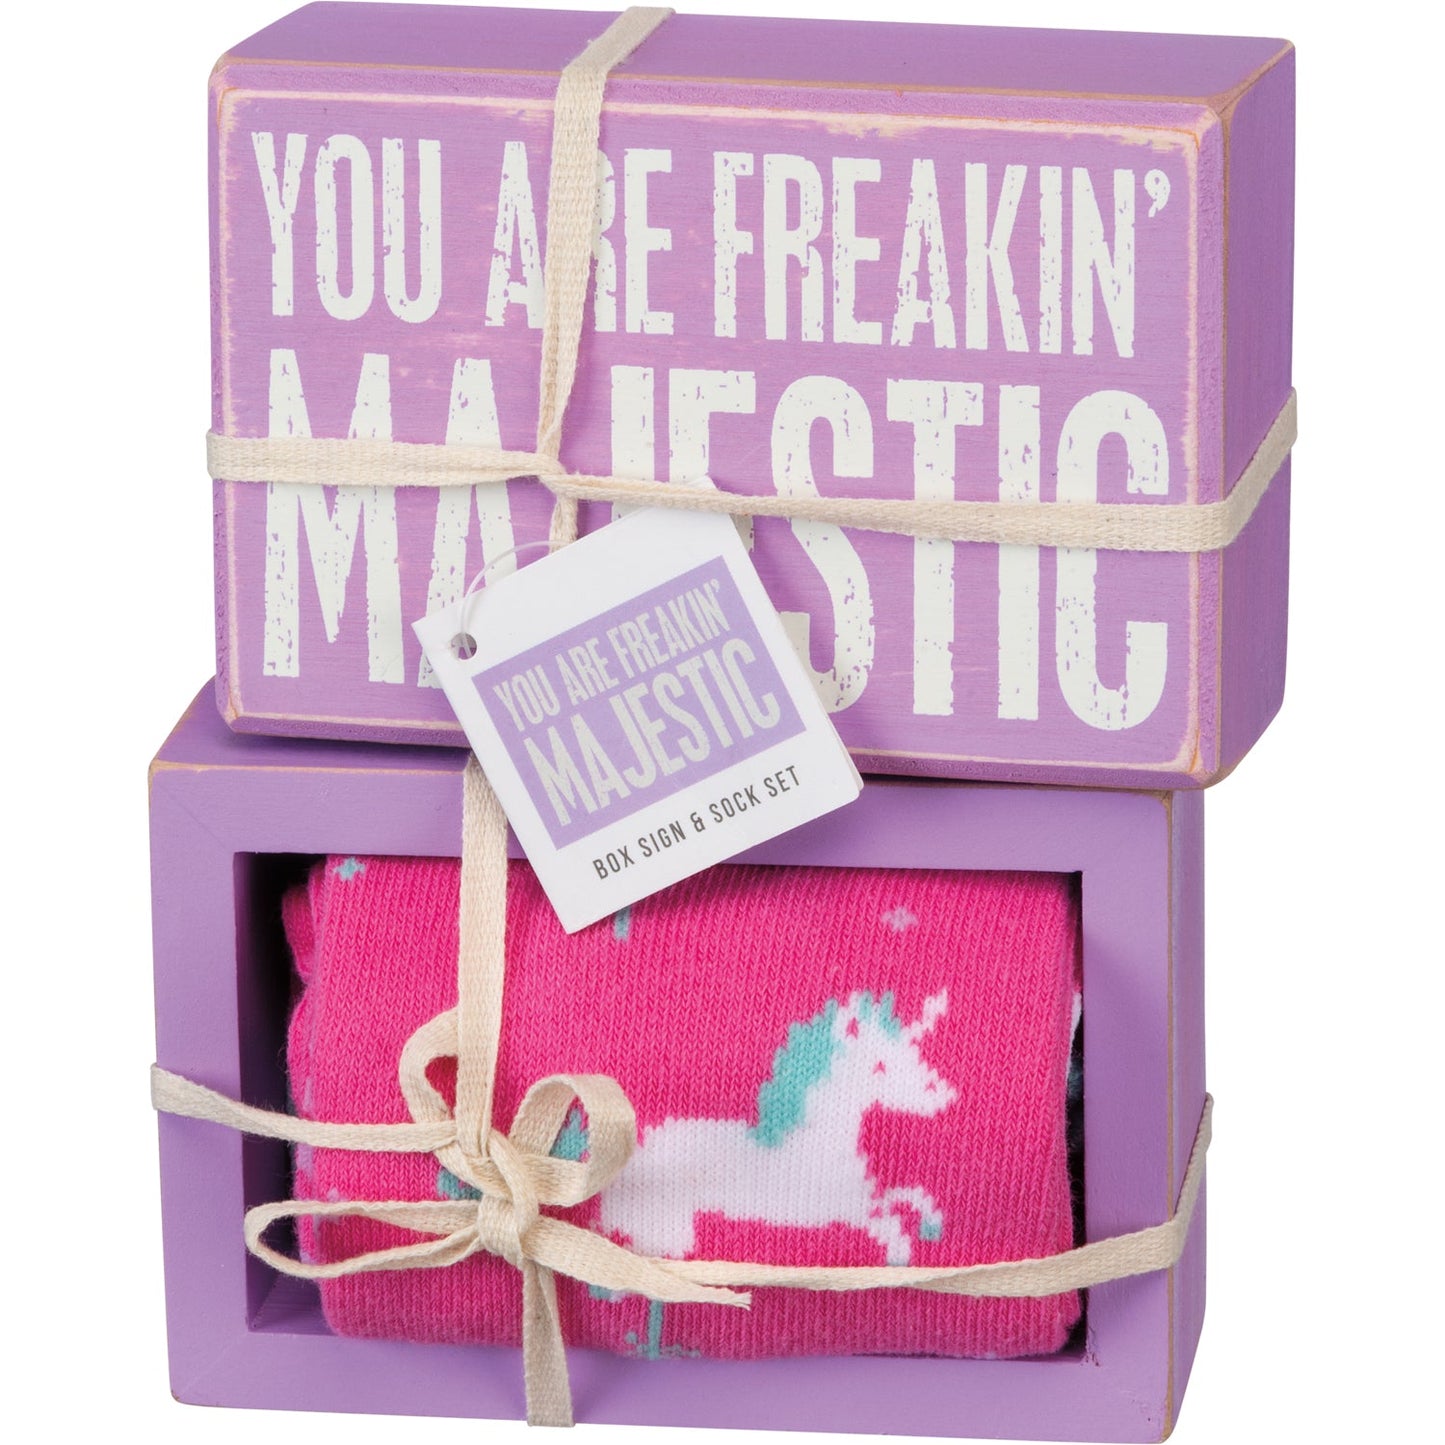 You Are Freakin' Majestic Unicorn Box Sign And Socks Giftable Set